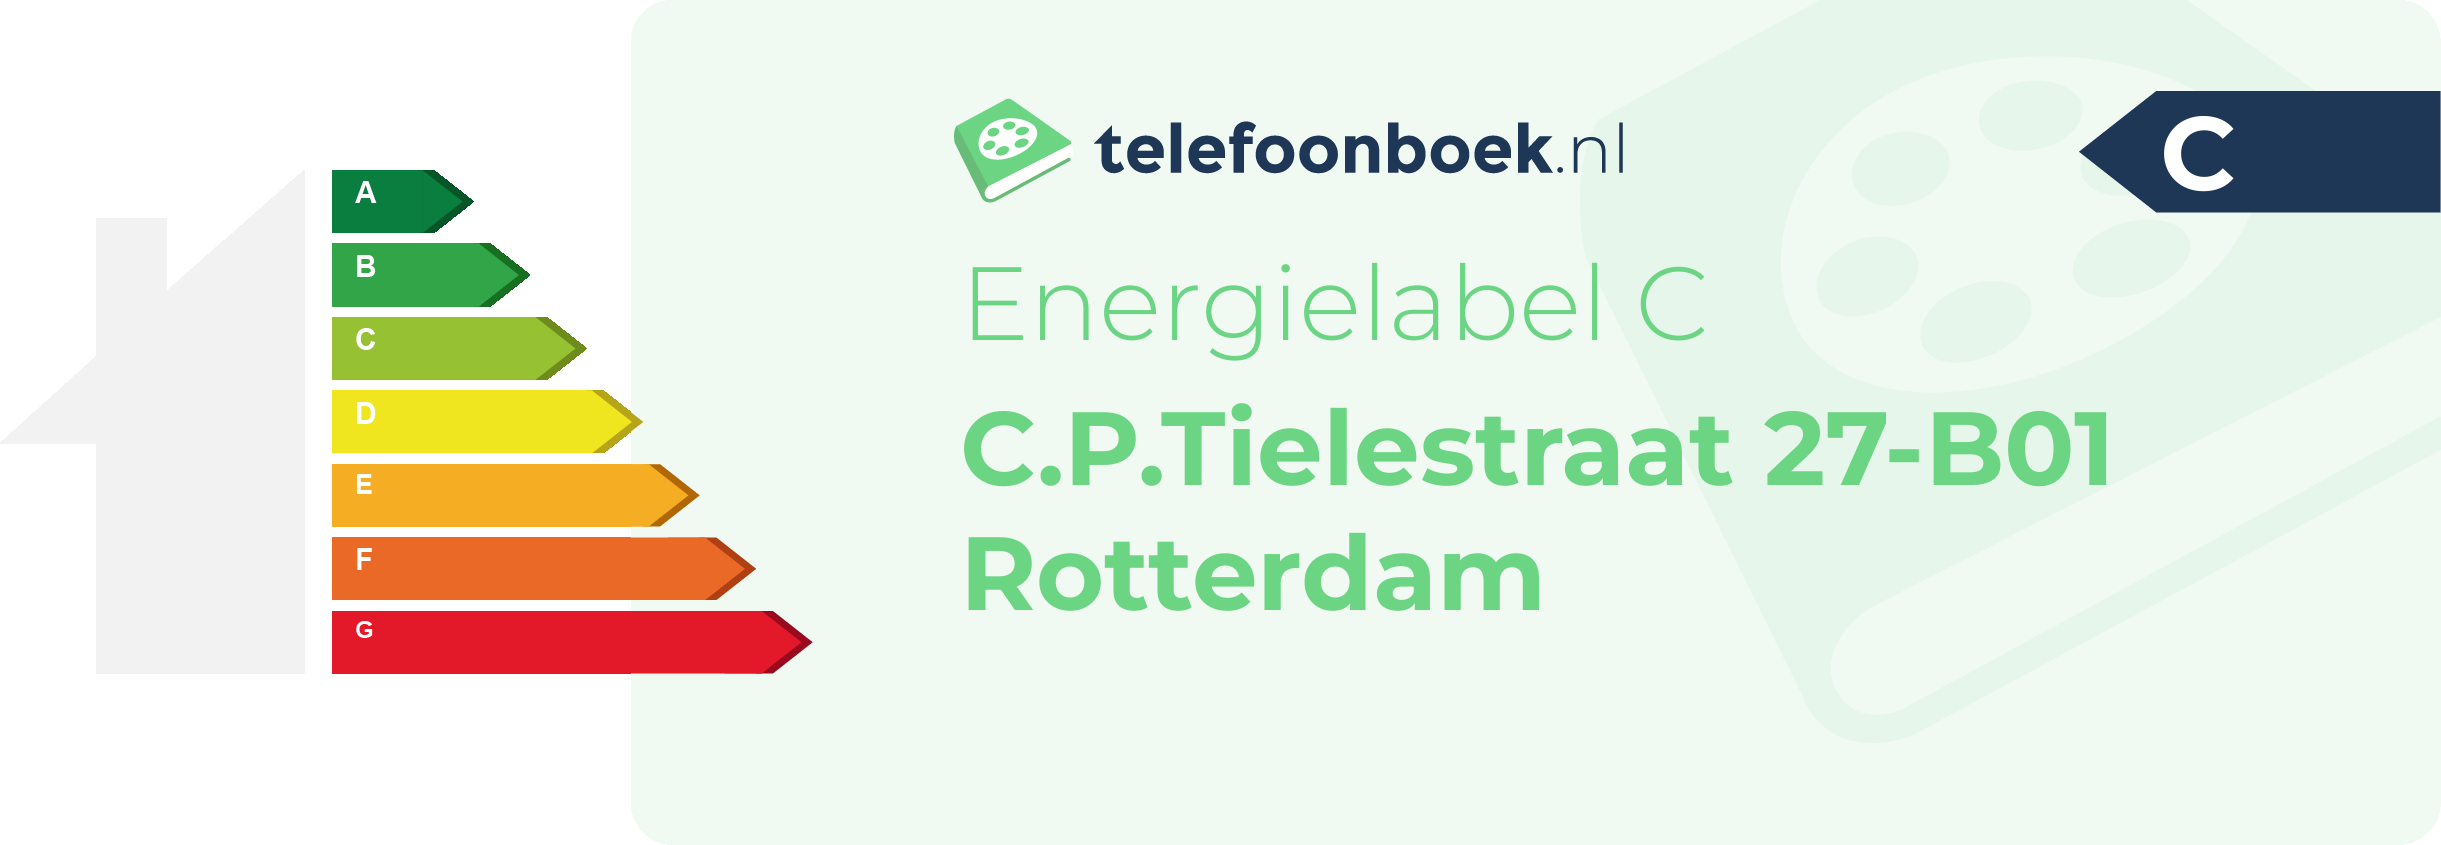 Energielabel C.P.Tielestraat 27-B01 Rotterdam